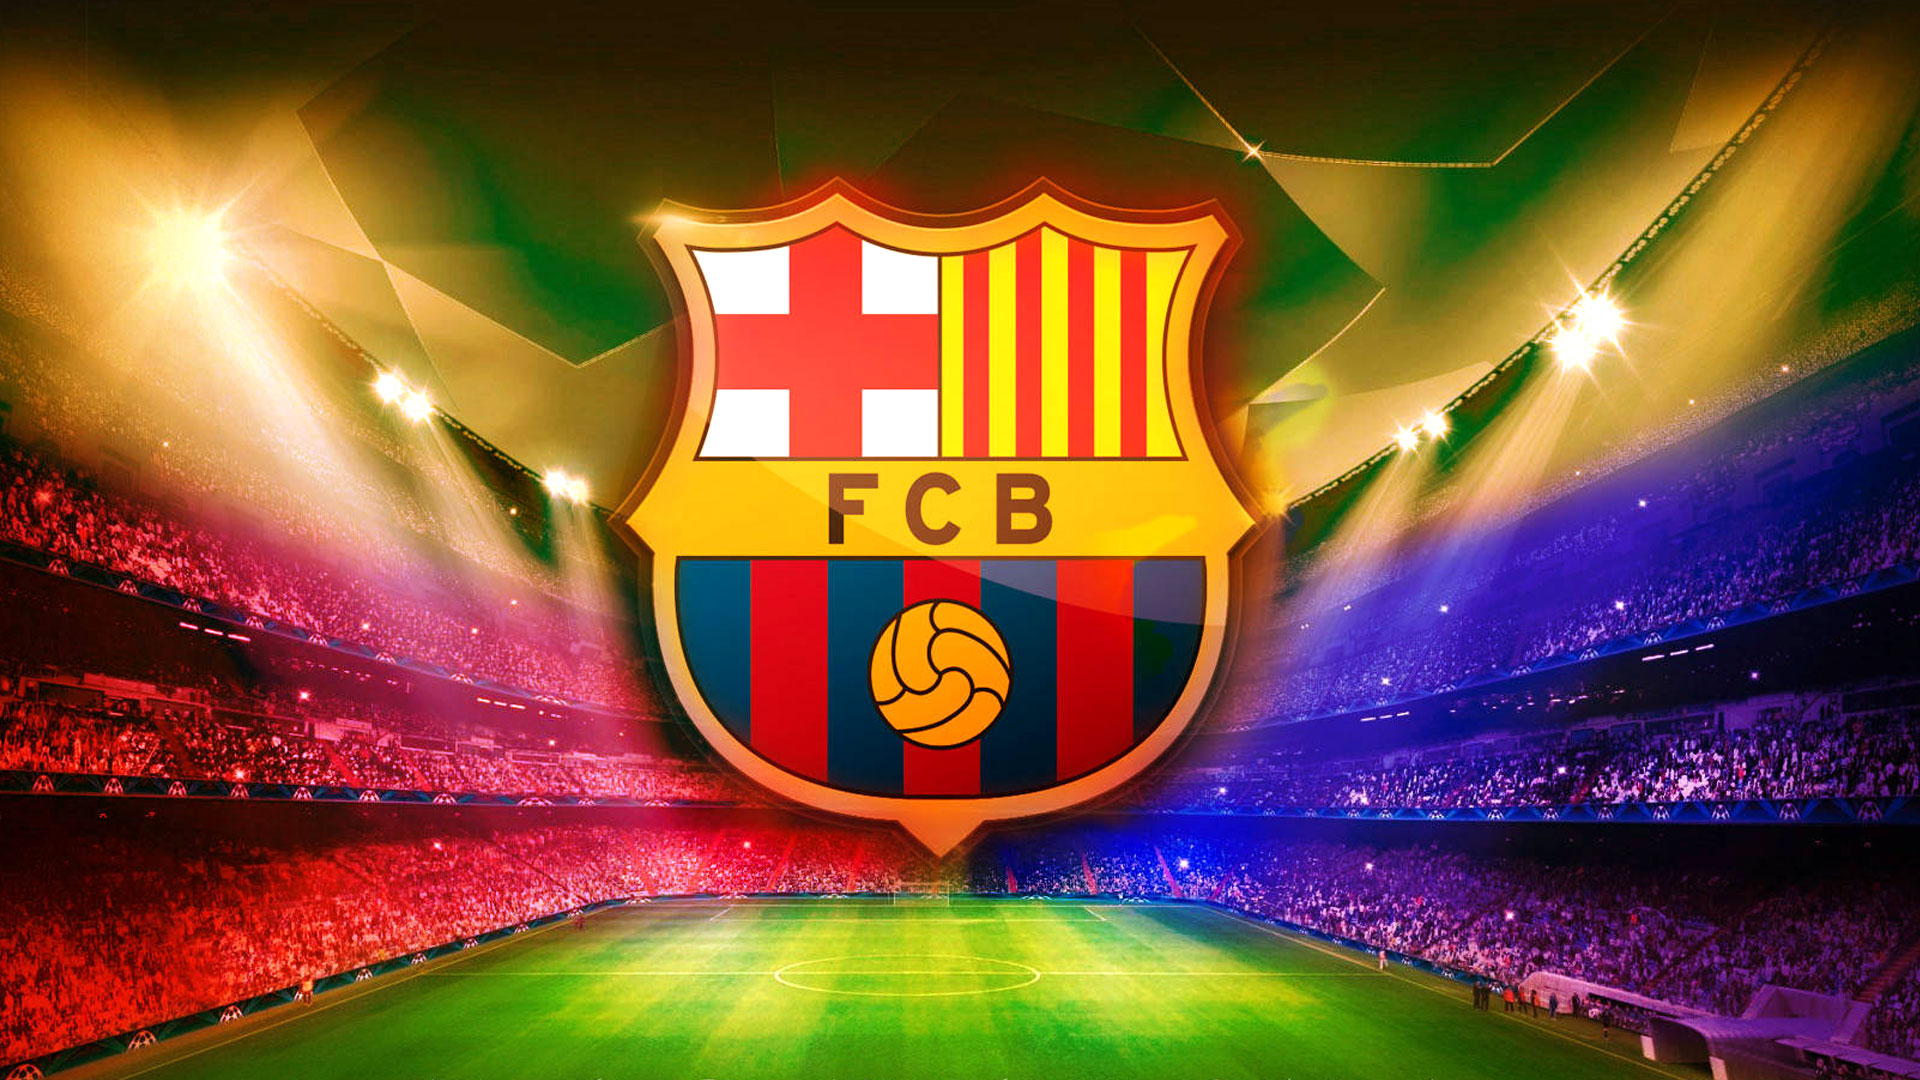 barcelona wallpaper 3d,football,stadium,sport venue,graphics,graphic design